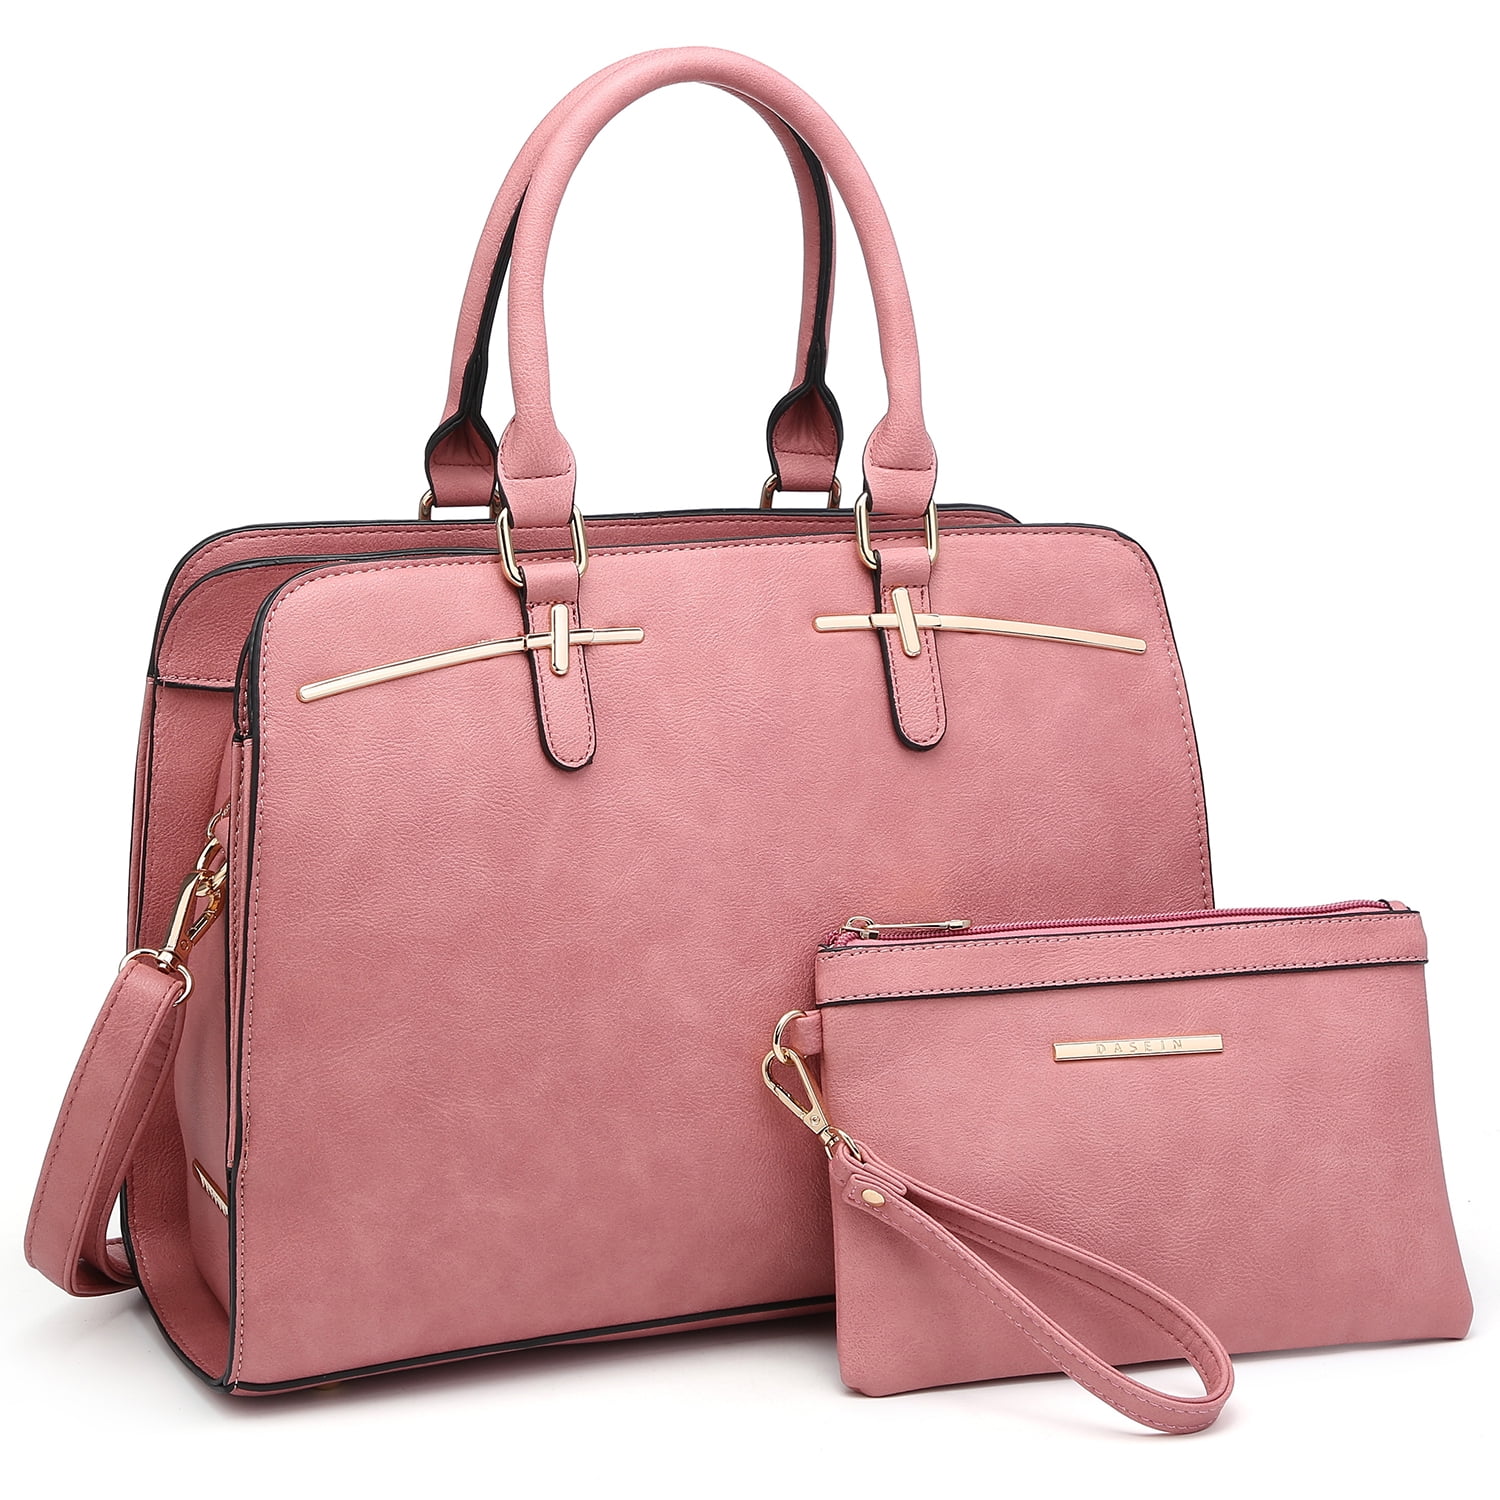 Pink Top Handle Satchel Handbags For Women Tote Shoulder Bags Purse PU Leather 